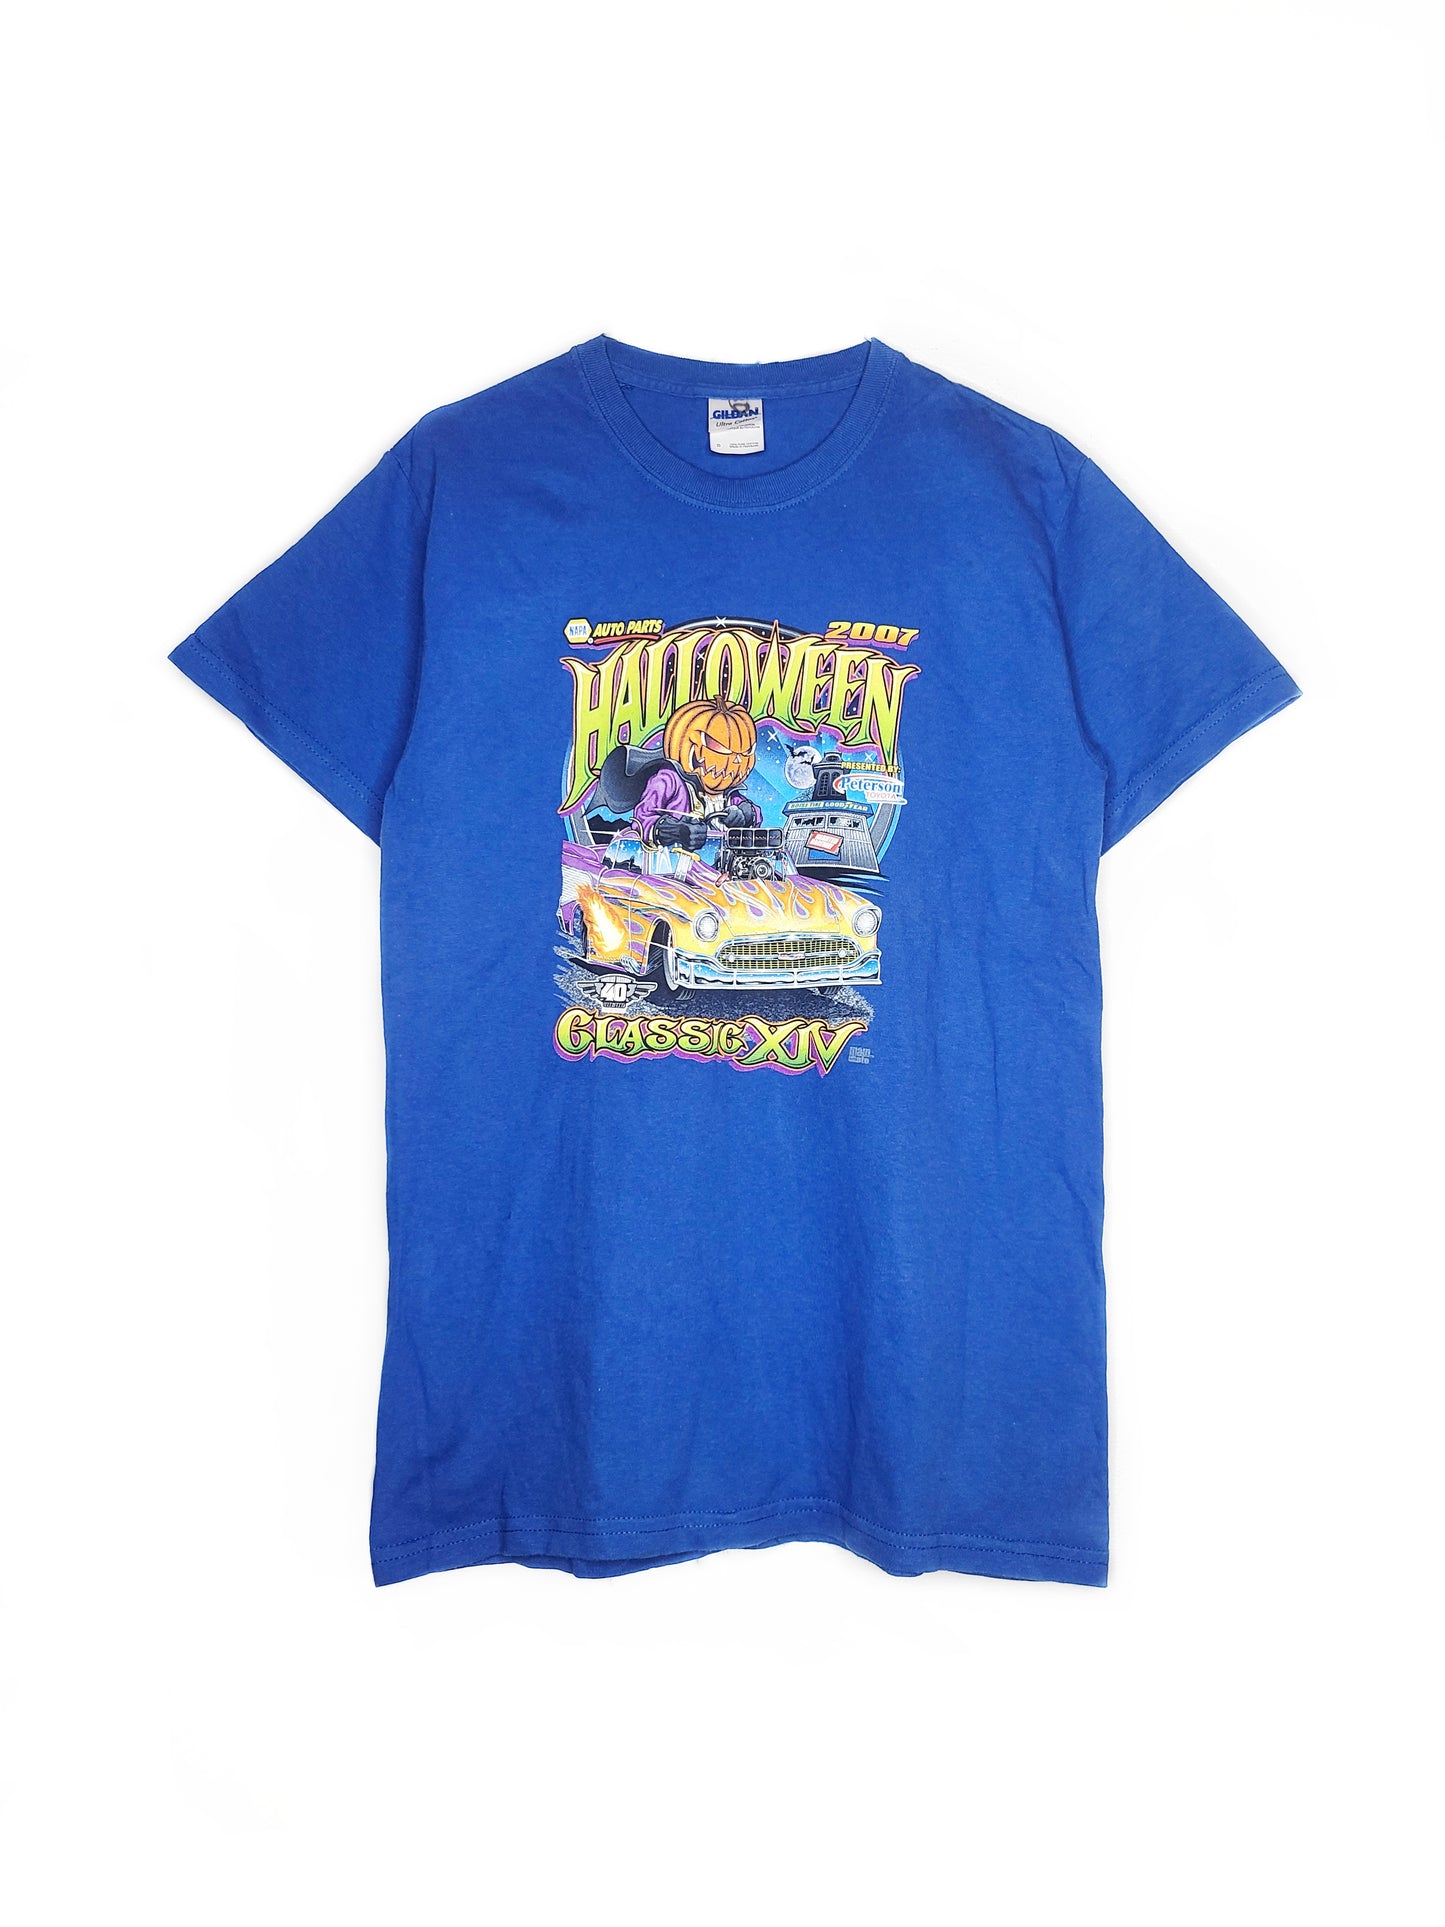 Tshirt oversize grunge flocage vintage colore 90s racing car streetwear